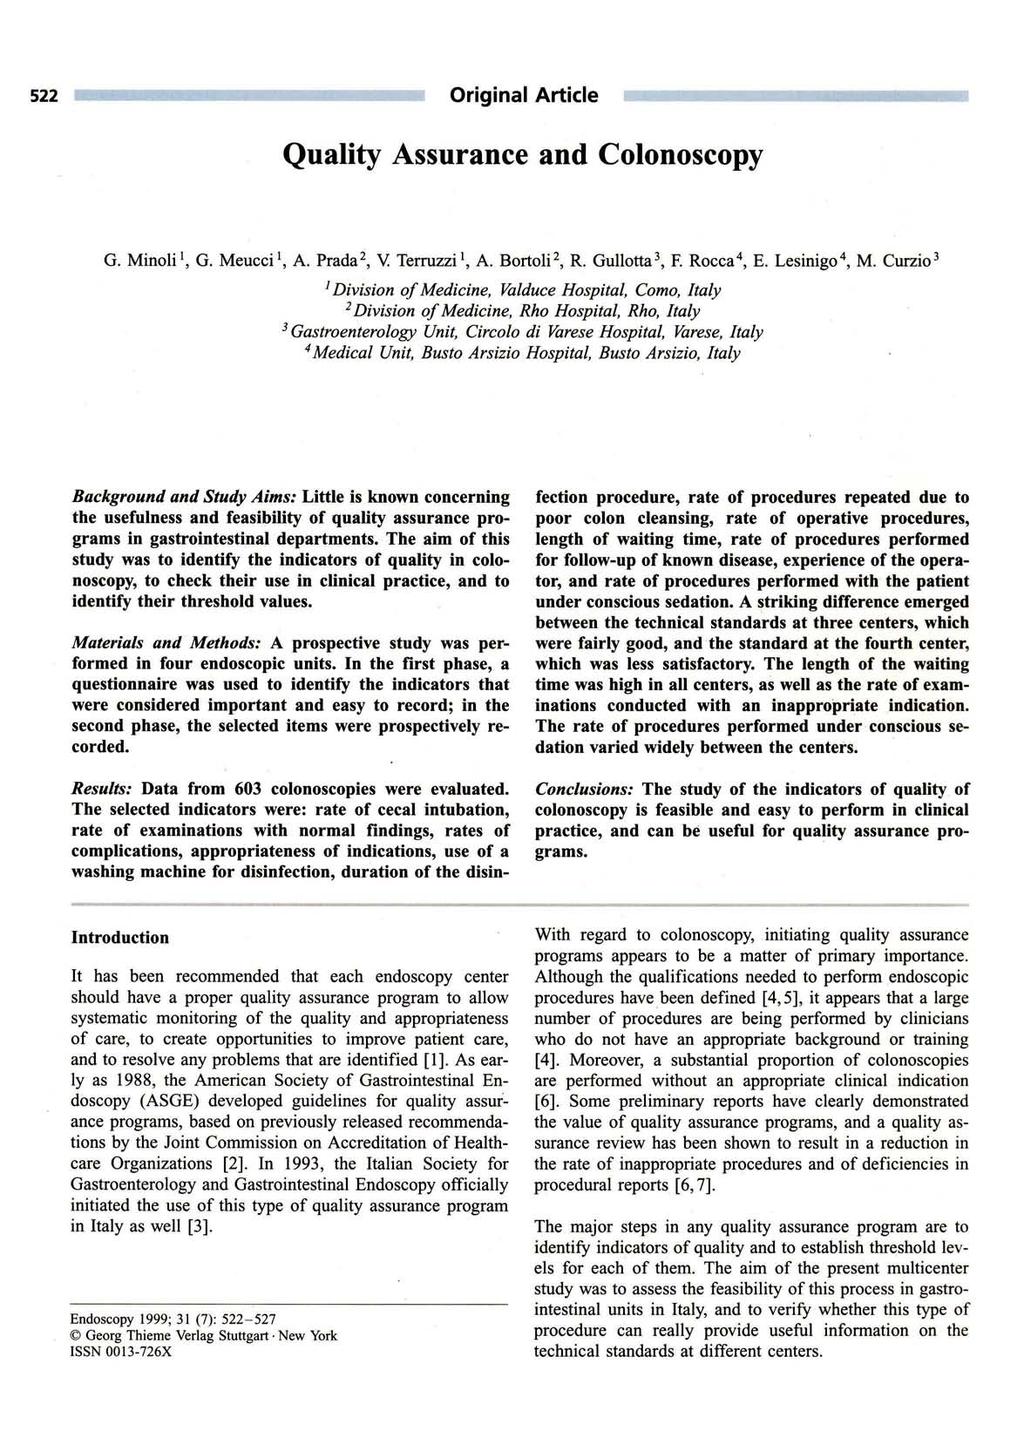 522 Original Article Quality Assurance and Colonoscopy G. Minoli 1, G. Meucci 1, A. Prada 2, V Terruzzi 1, A. Bortoli 2, R. Gullotta 3, F. Rocca 4, E. Lesinigo 4, M.